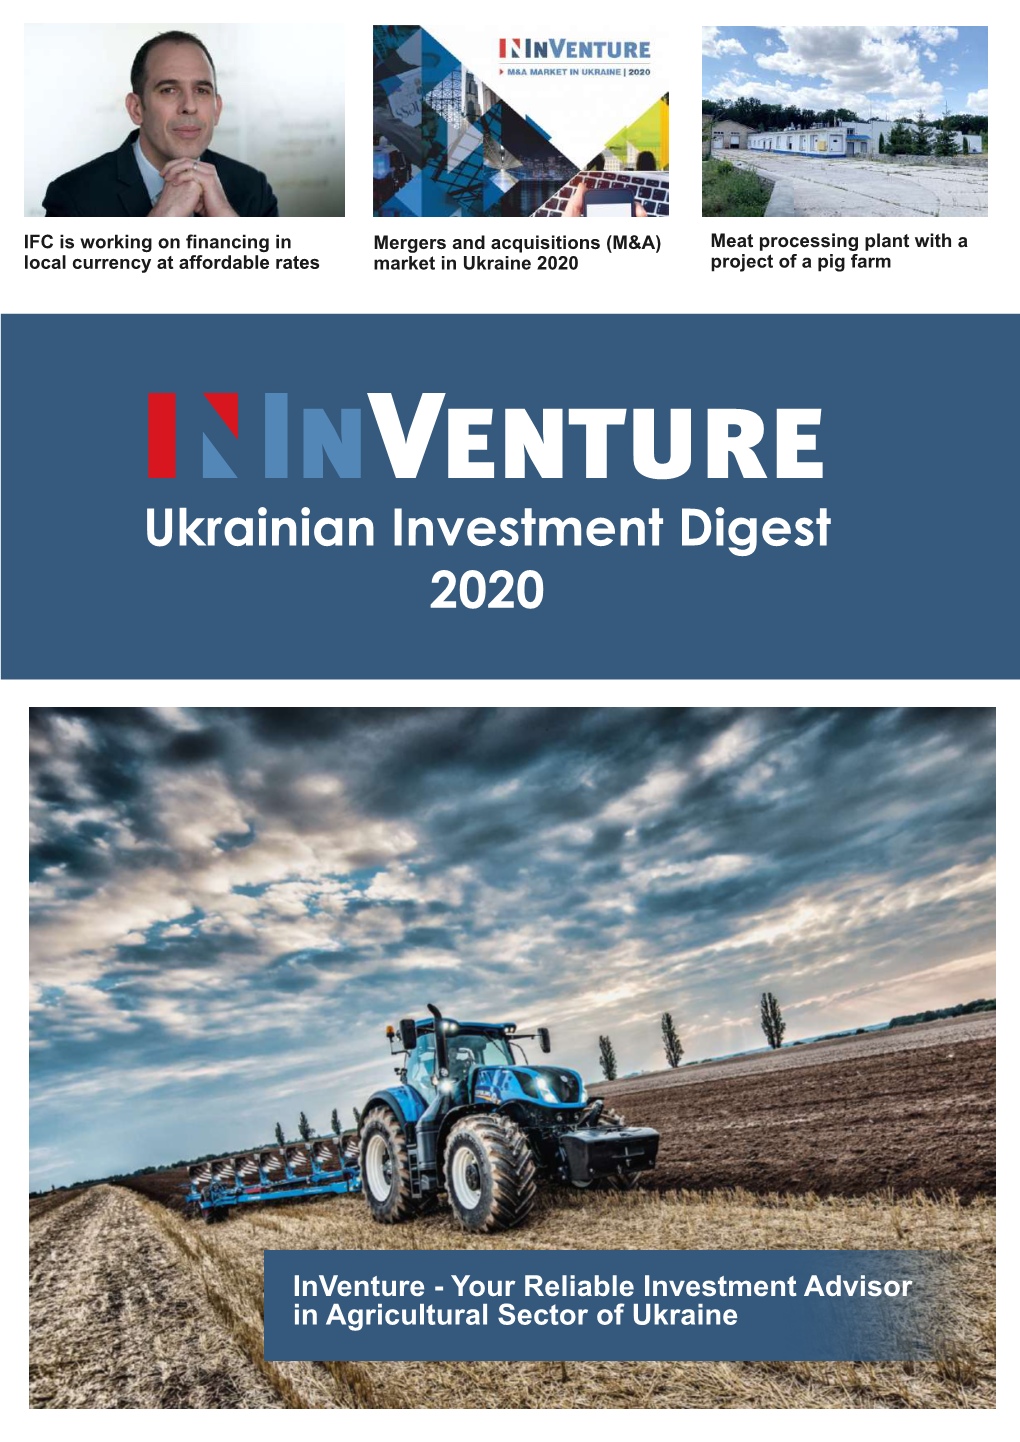 Inventure Investment Digest (2020).Cdr